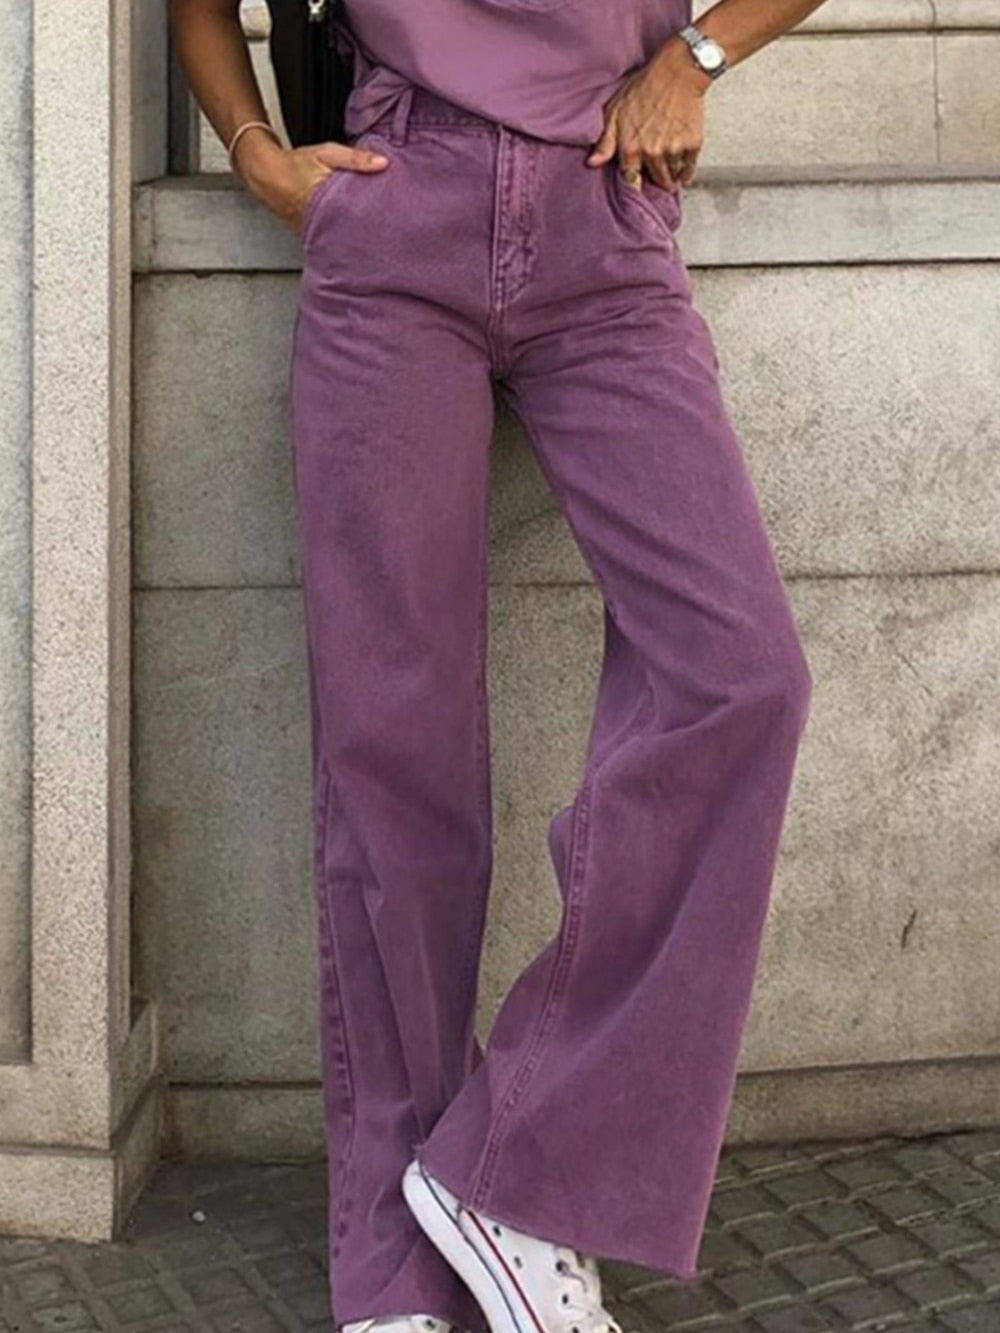 Vintage Jeans Women Casual Loose High Waist Straight Trousers Slim Women's Pants Autumn Streetwear Denim Female Trousers Purple